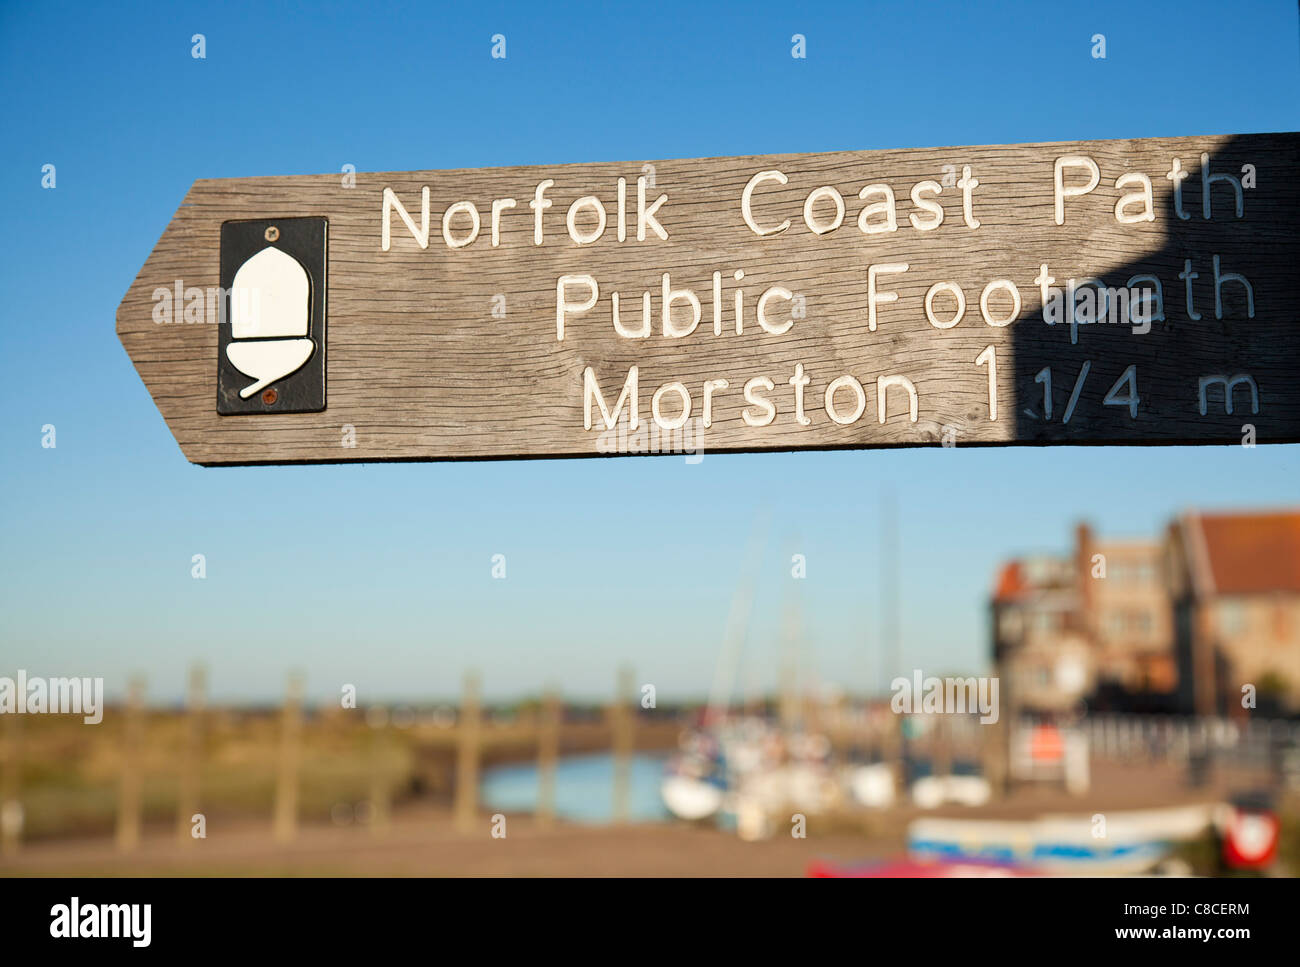 Norfolk Küstenpfad Schild am Blakeney, Morston Norfolk East Anglia England UK GB EU Europa Stockfoto